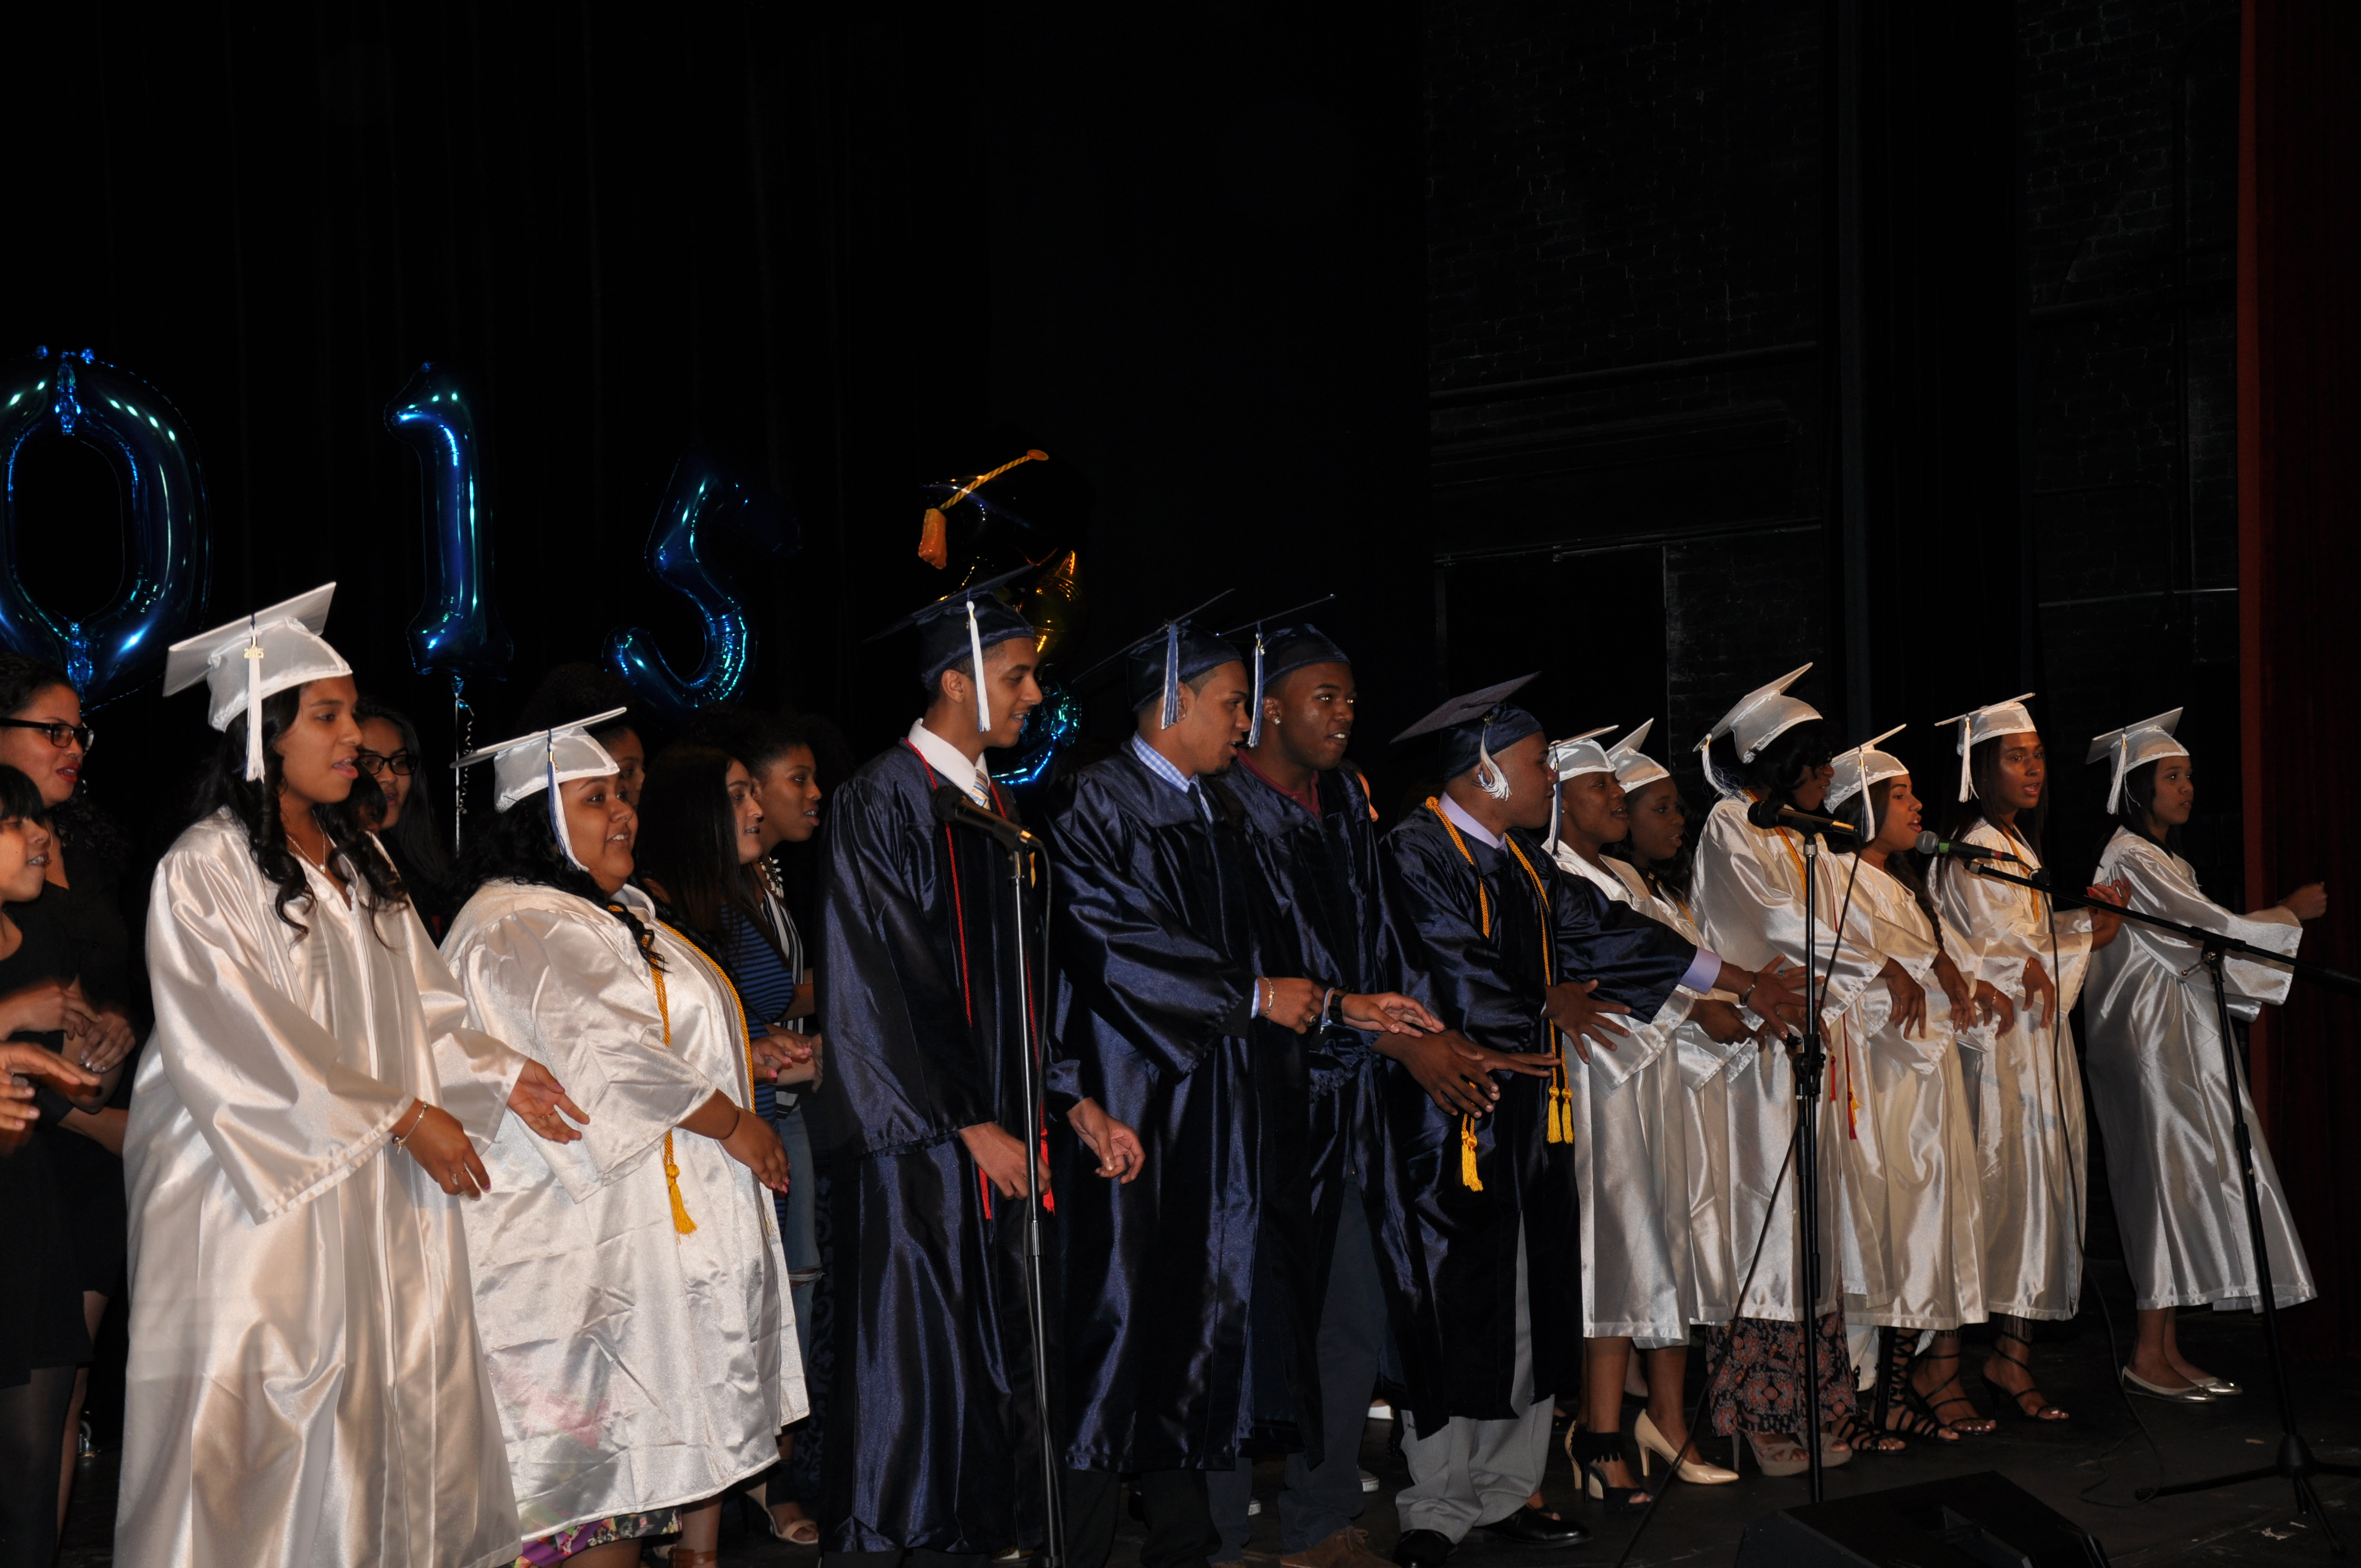 Graduation-2015-143